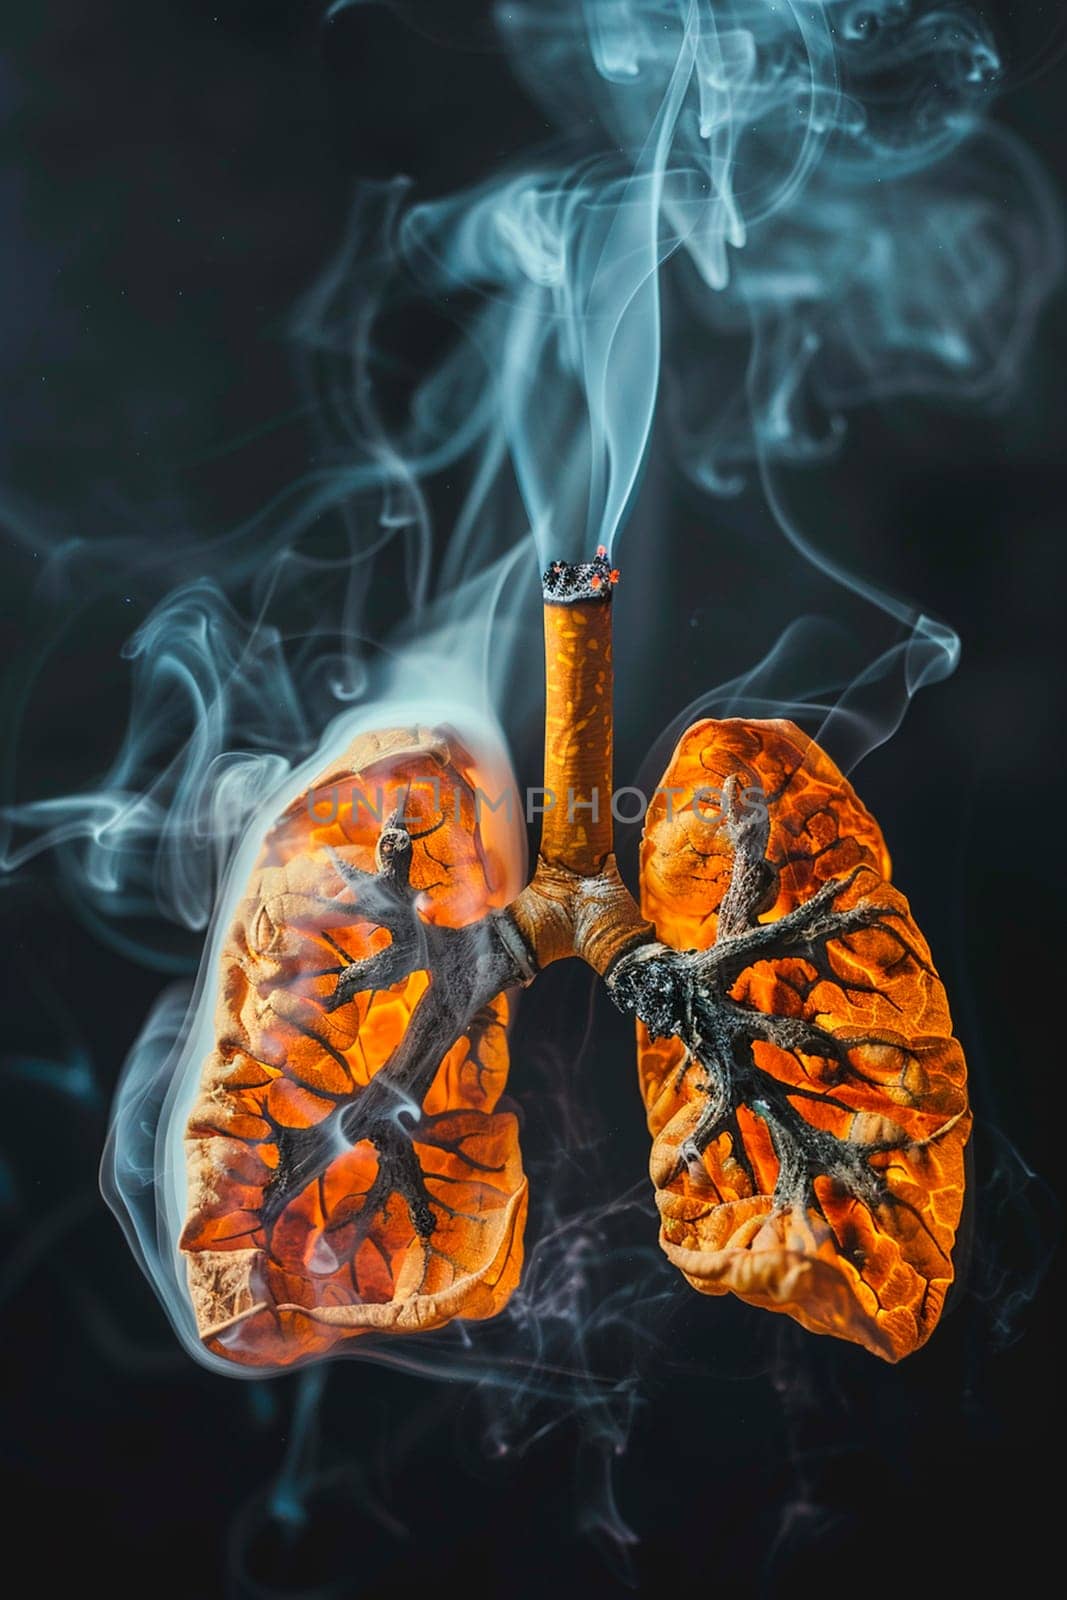 Smoker's lungs in smoke. Selective focus. by yanadjana